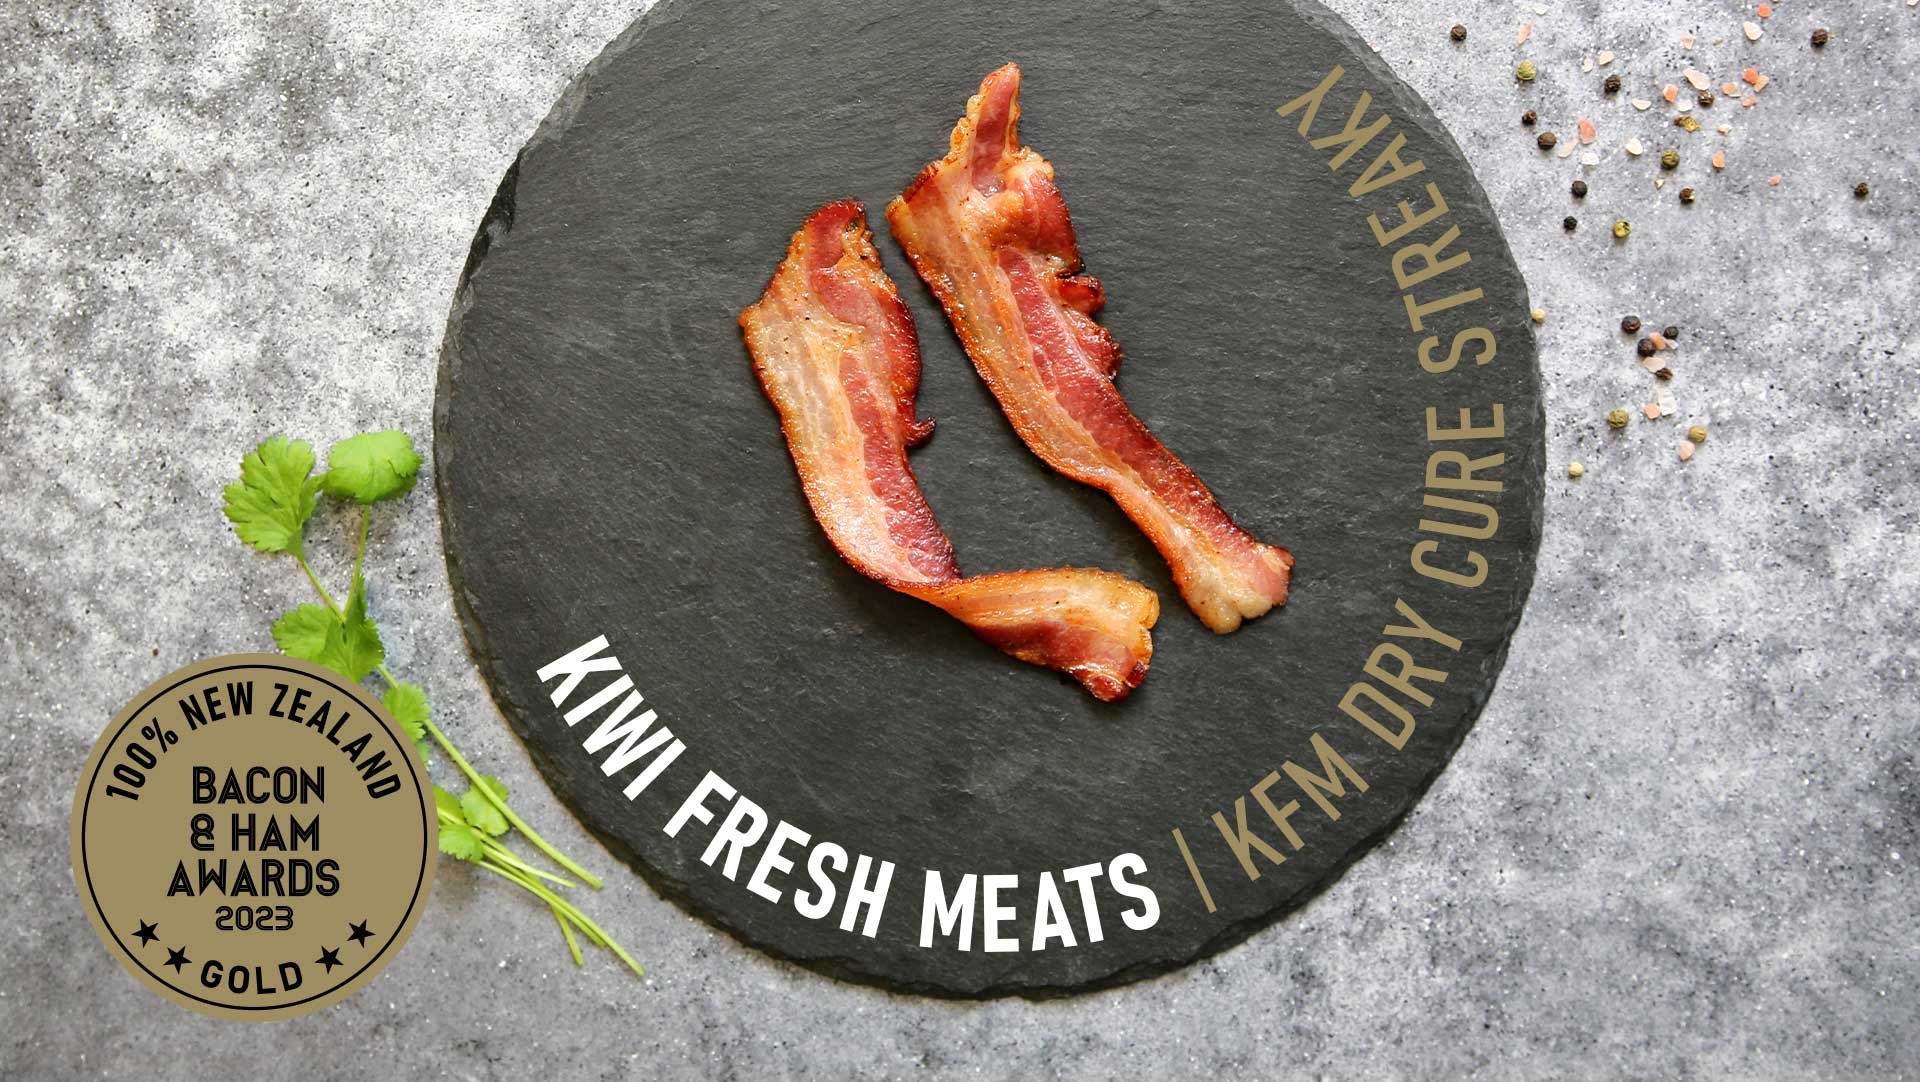 Kiwi Fresh Meats